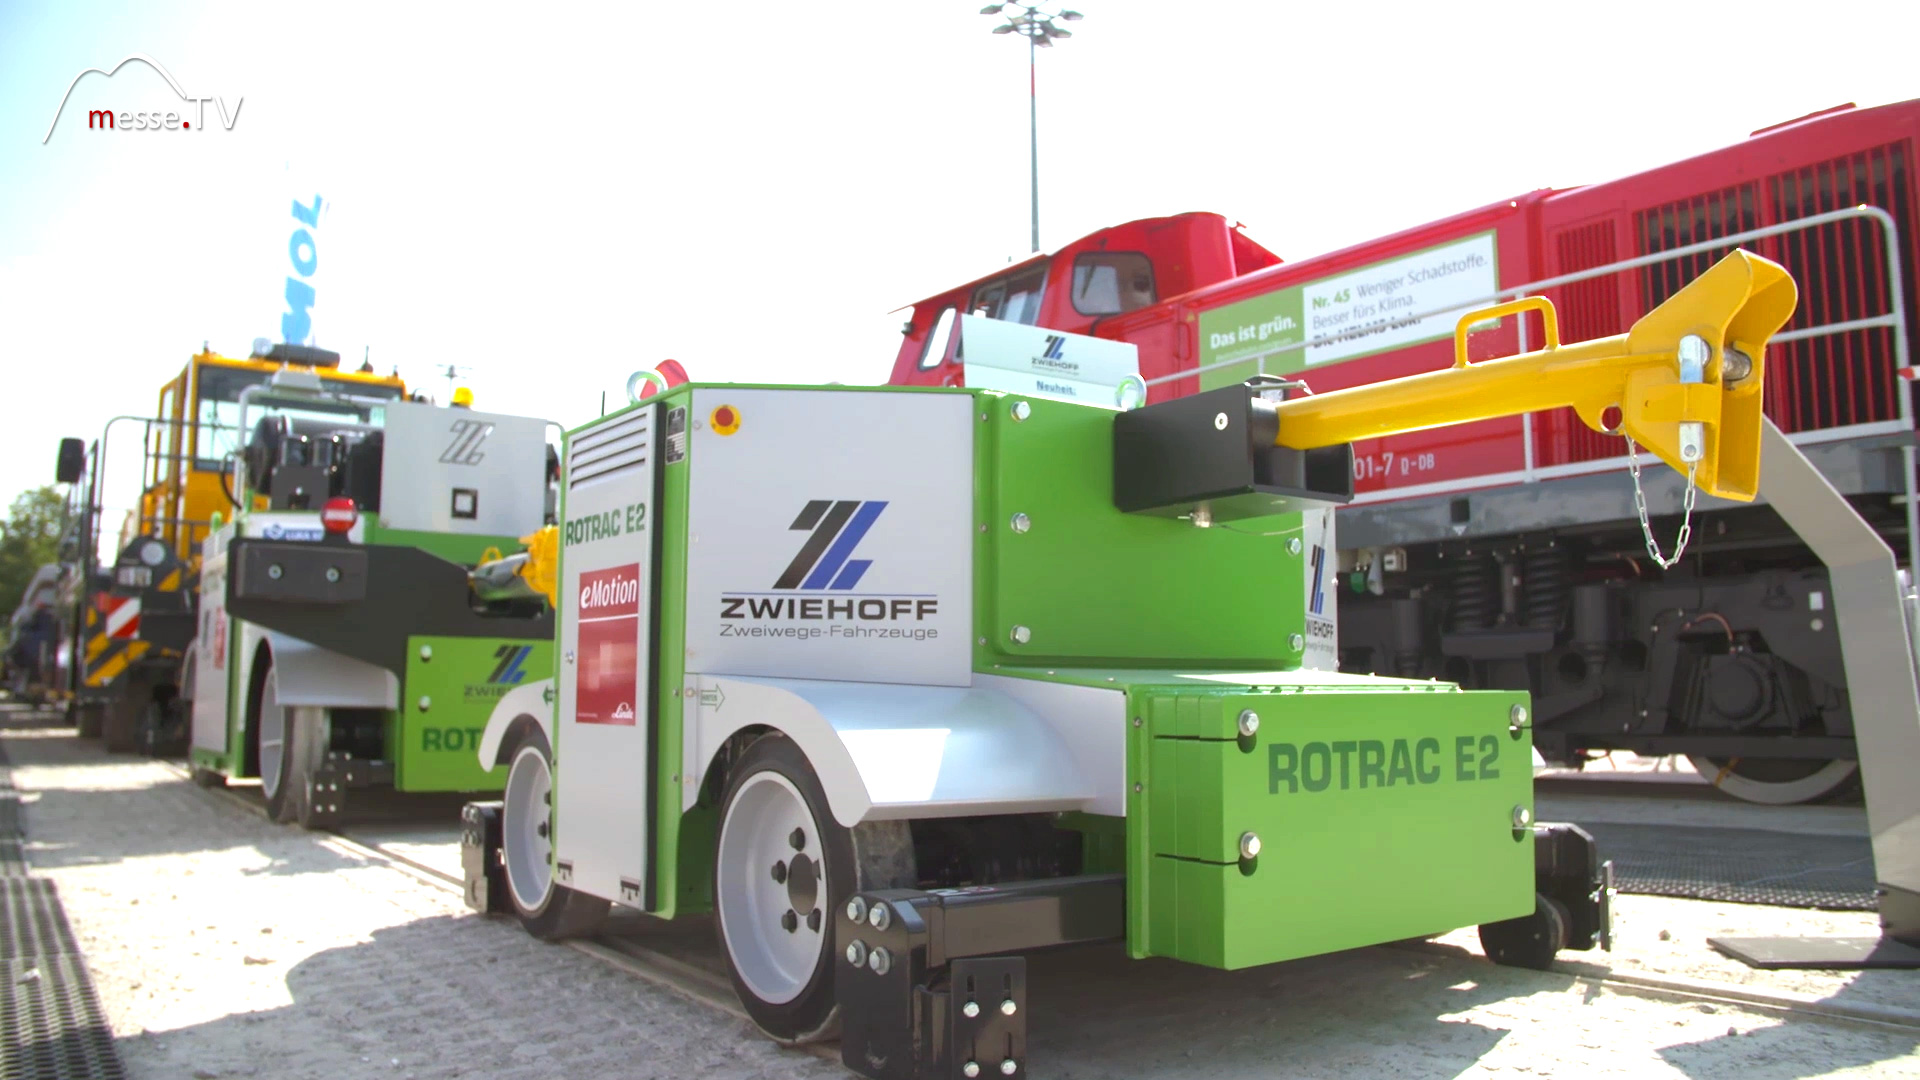 ZWIEHOFF Two way vehicles rail and road transport logistic 2019 Munich